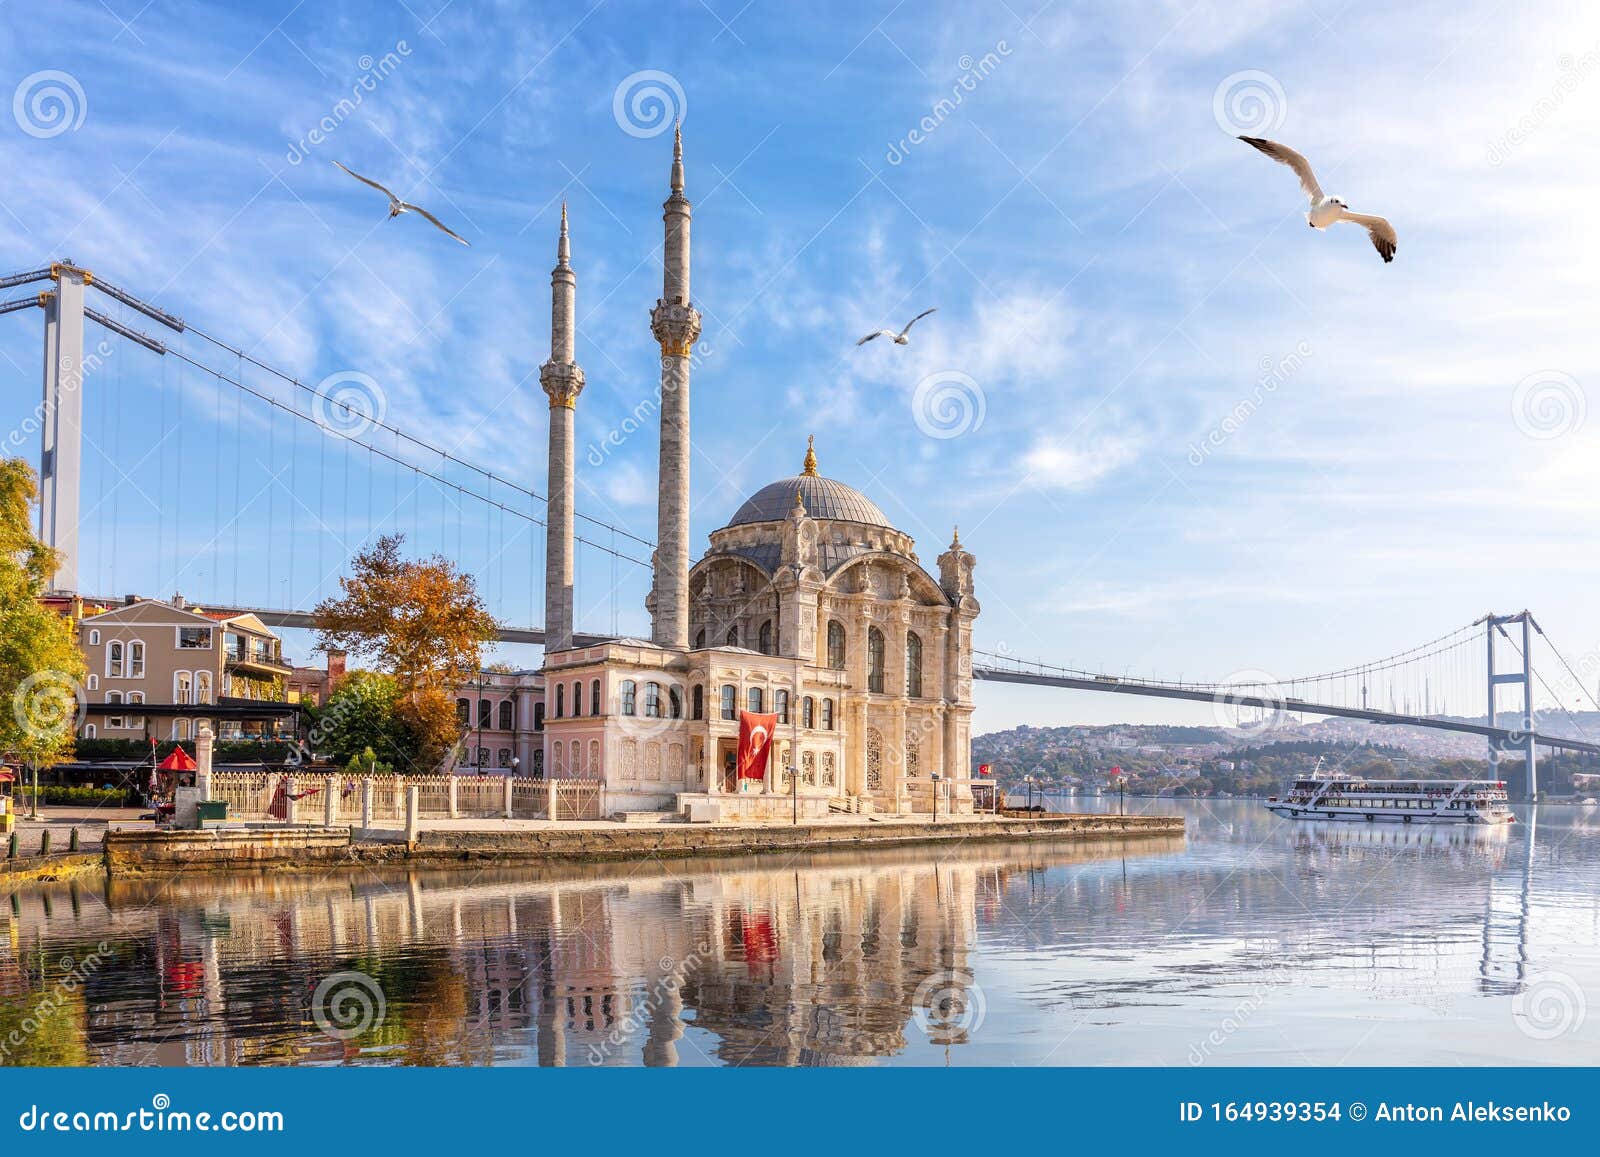 beautiful ortakoy mosque and the bosporus, istanbul, turkey